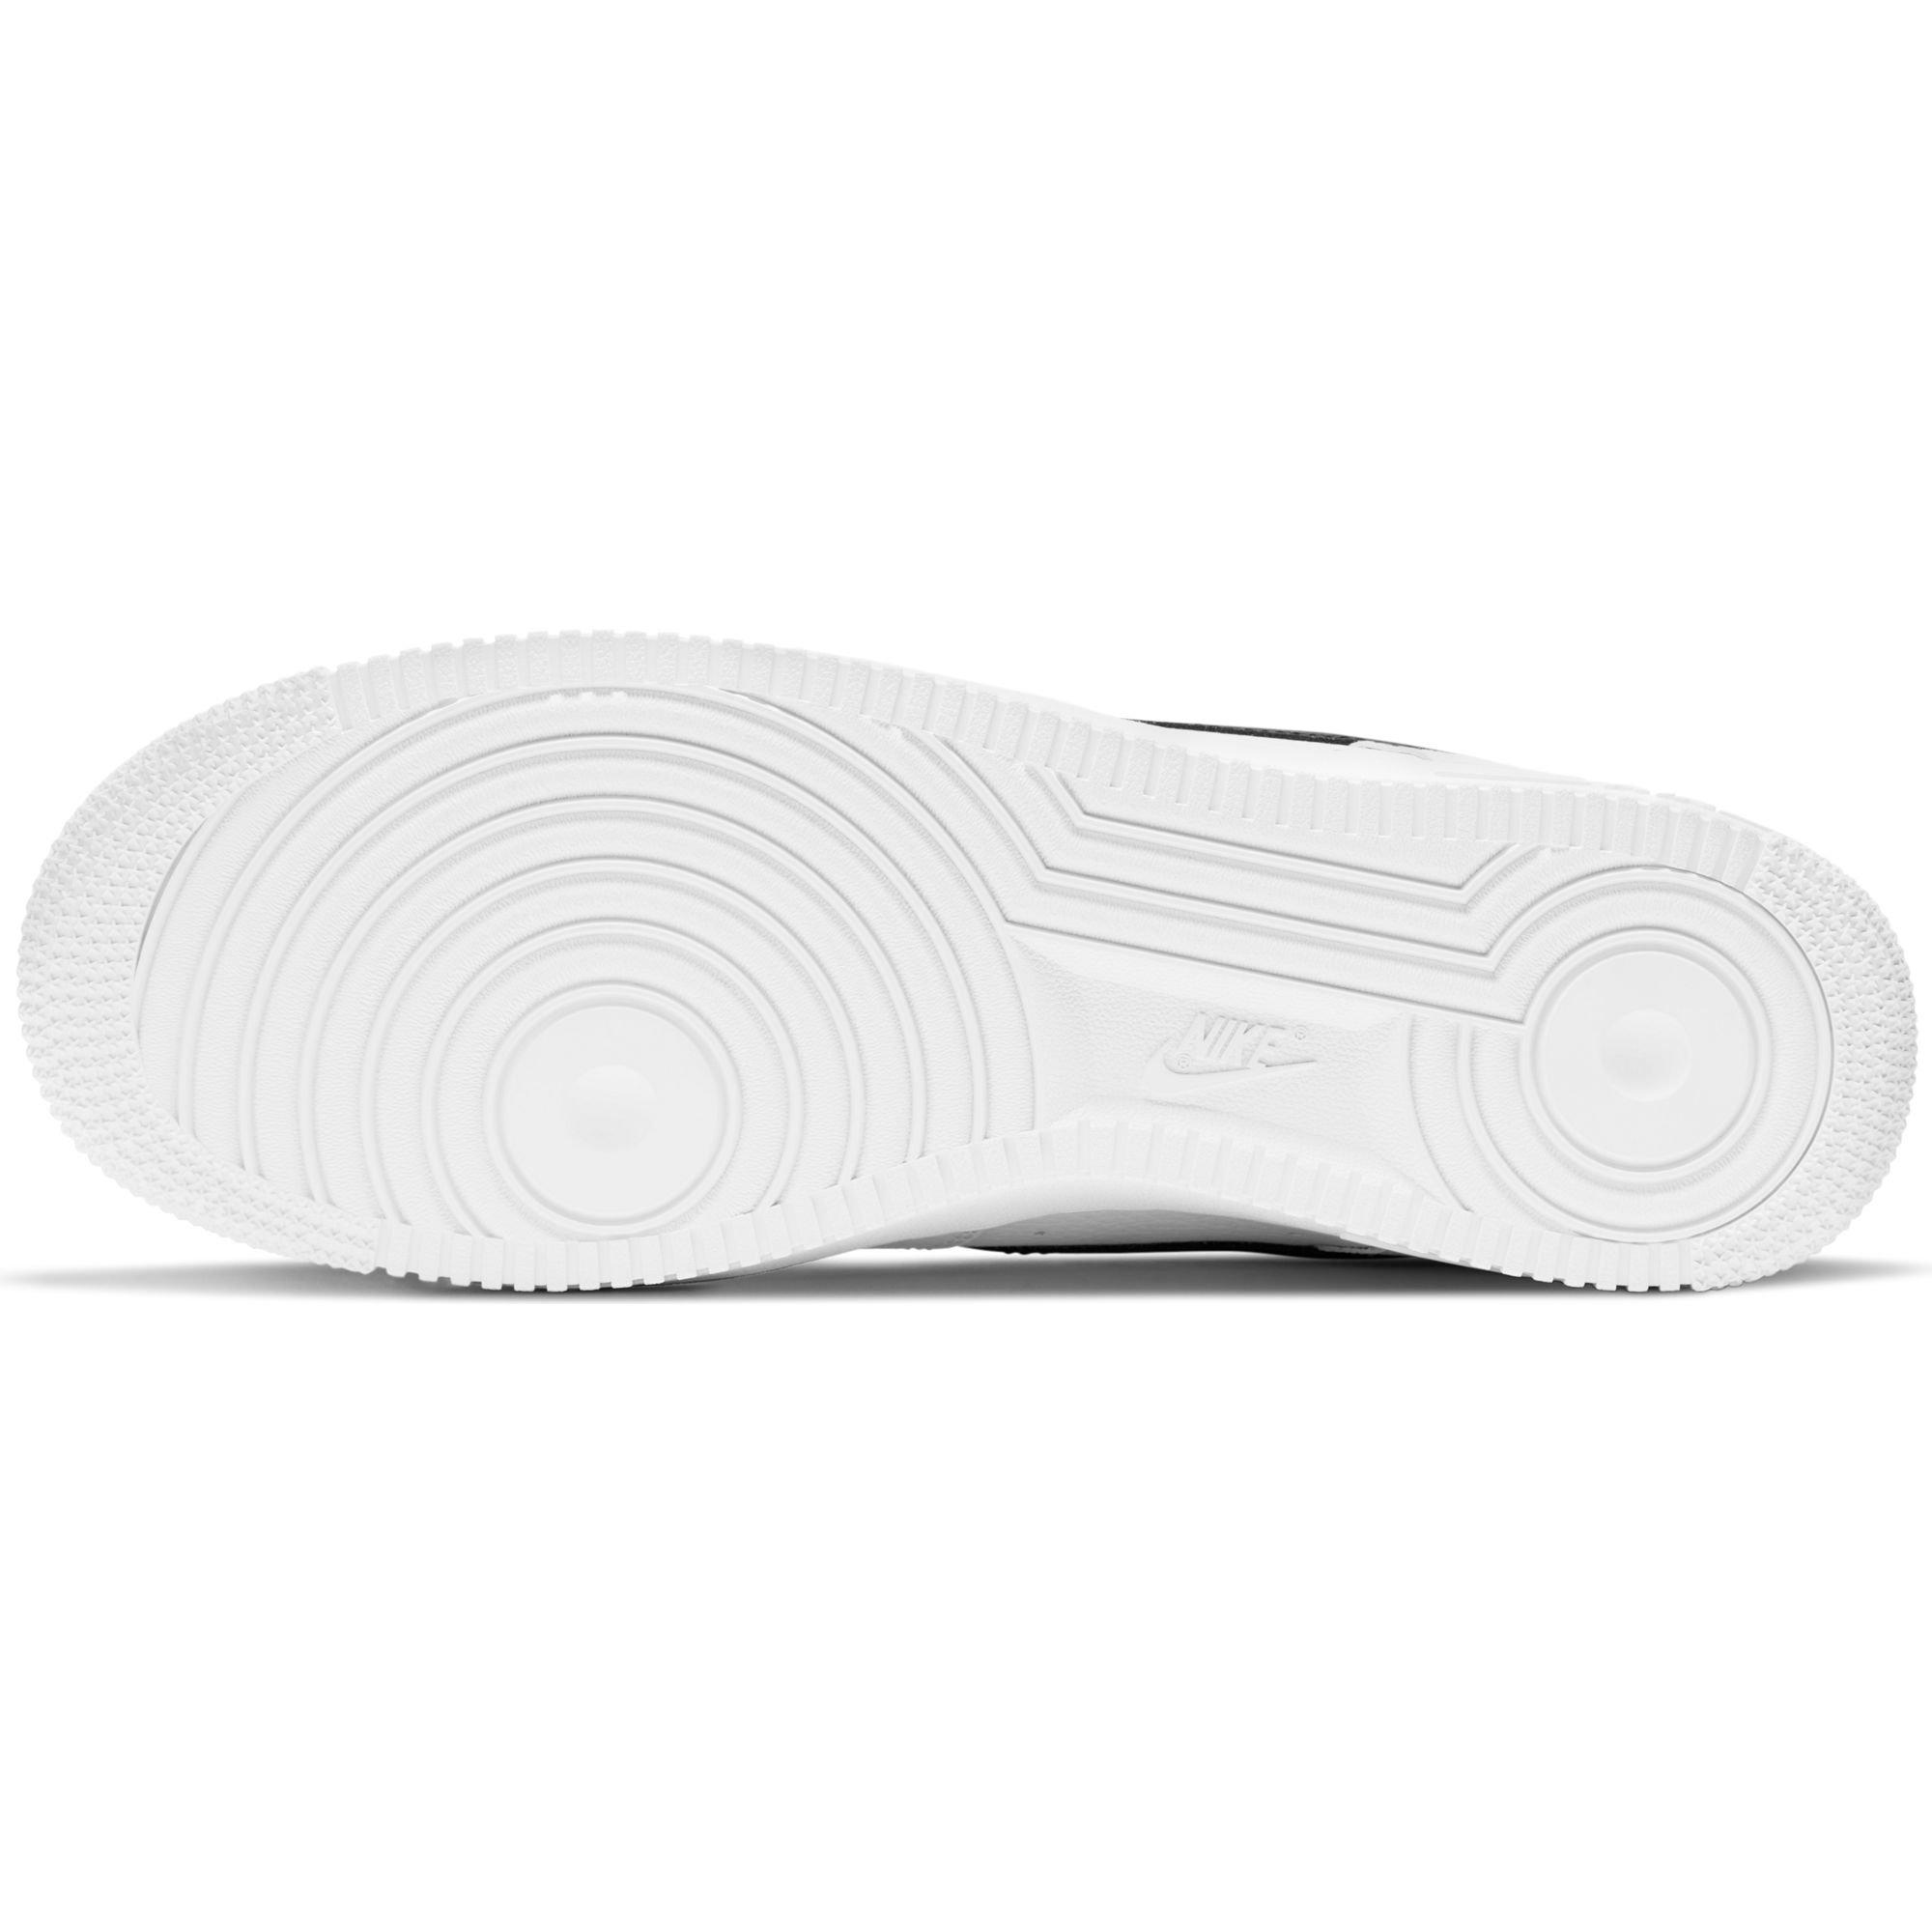 Nike Air Raid White/University/Black Men's Shoe - Hibbett